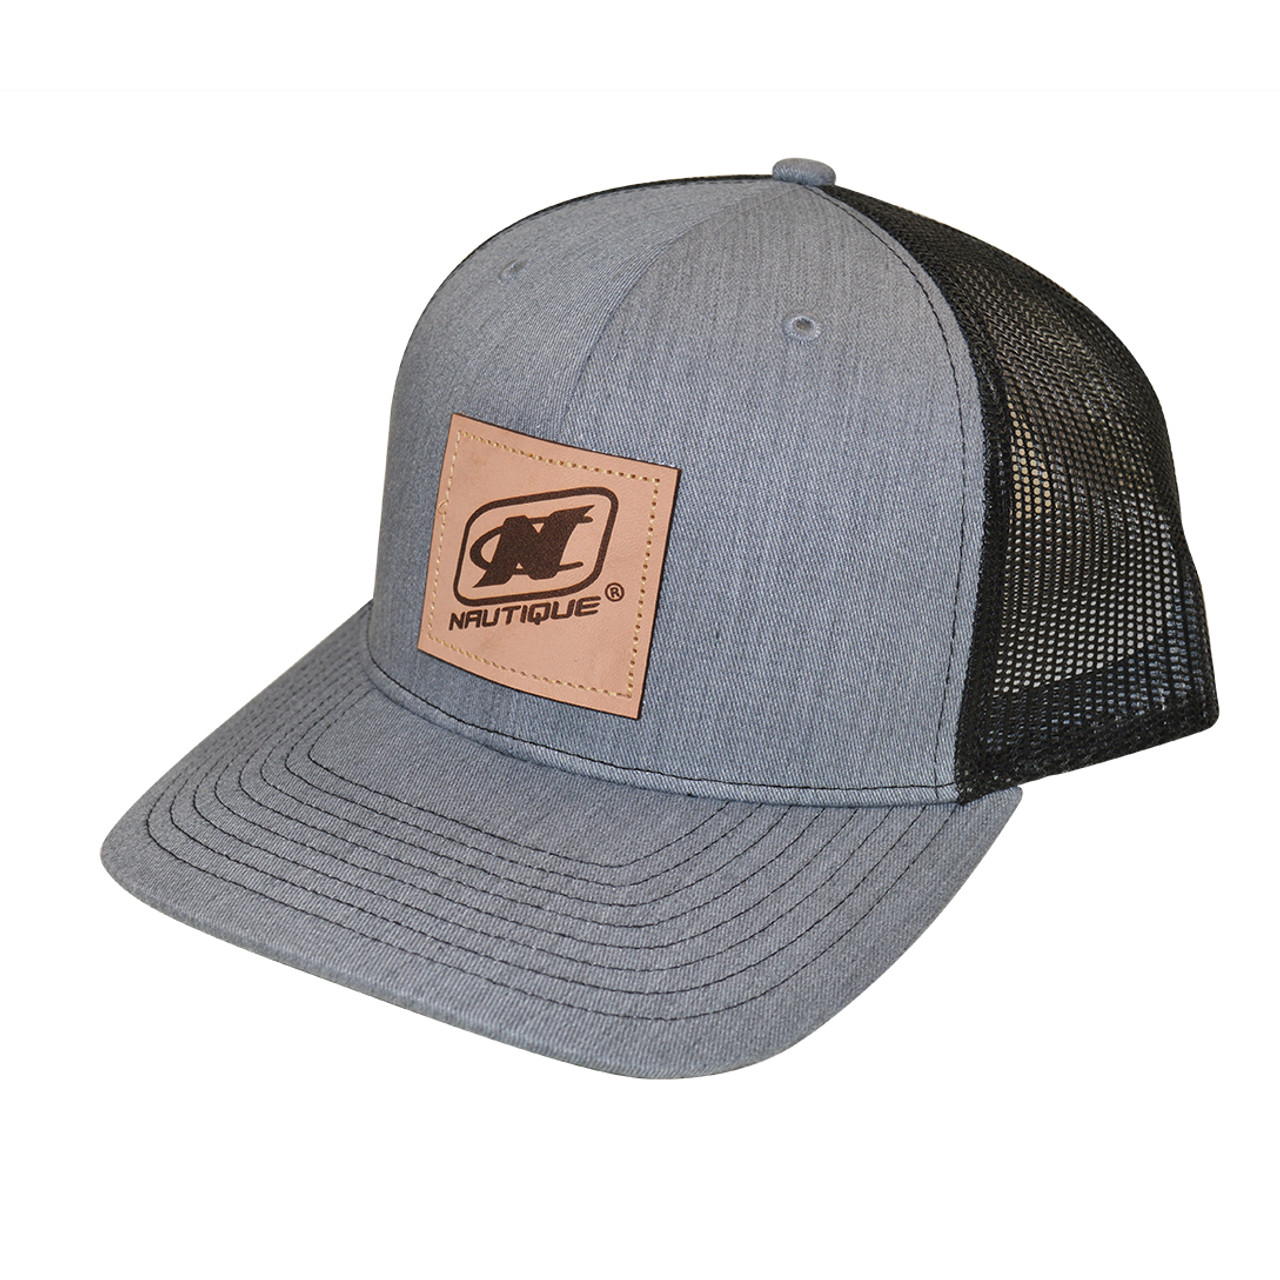 Nautique Trucker Hat w/ Leather Patch - Nautiqueparts.com